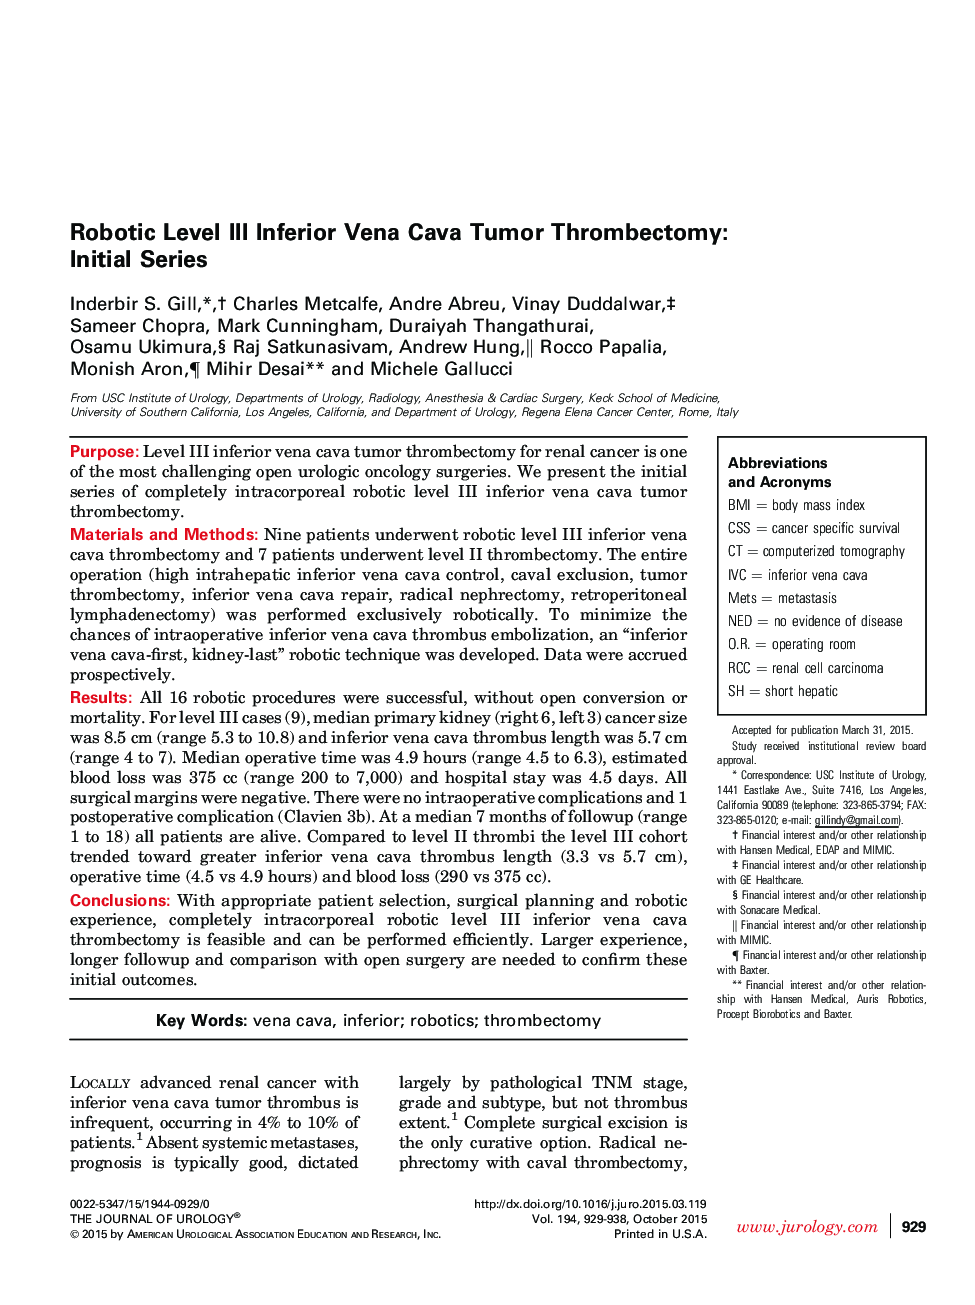 Robotic Level III Inferior Vena Cava Tumor Thrombectomy: Initial Series 